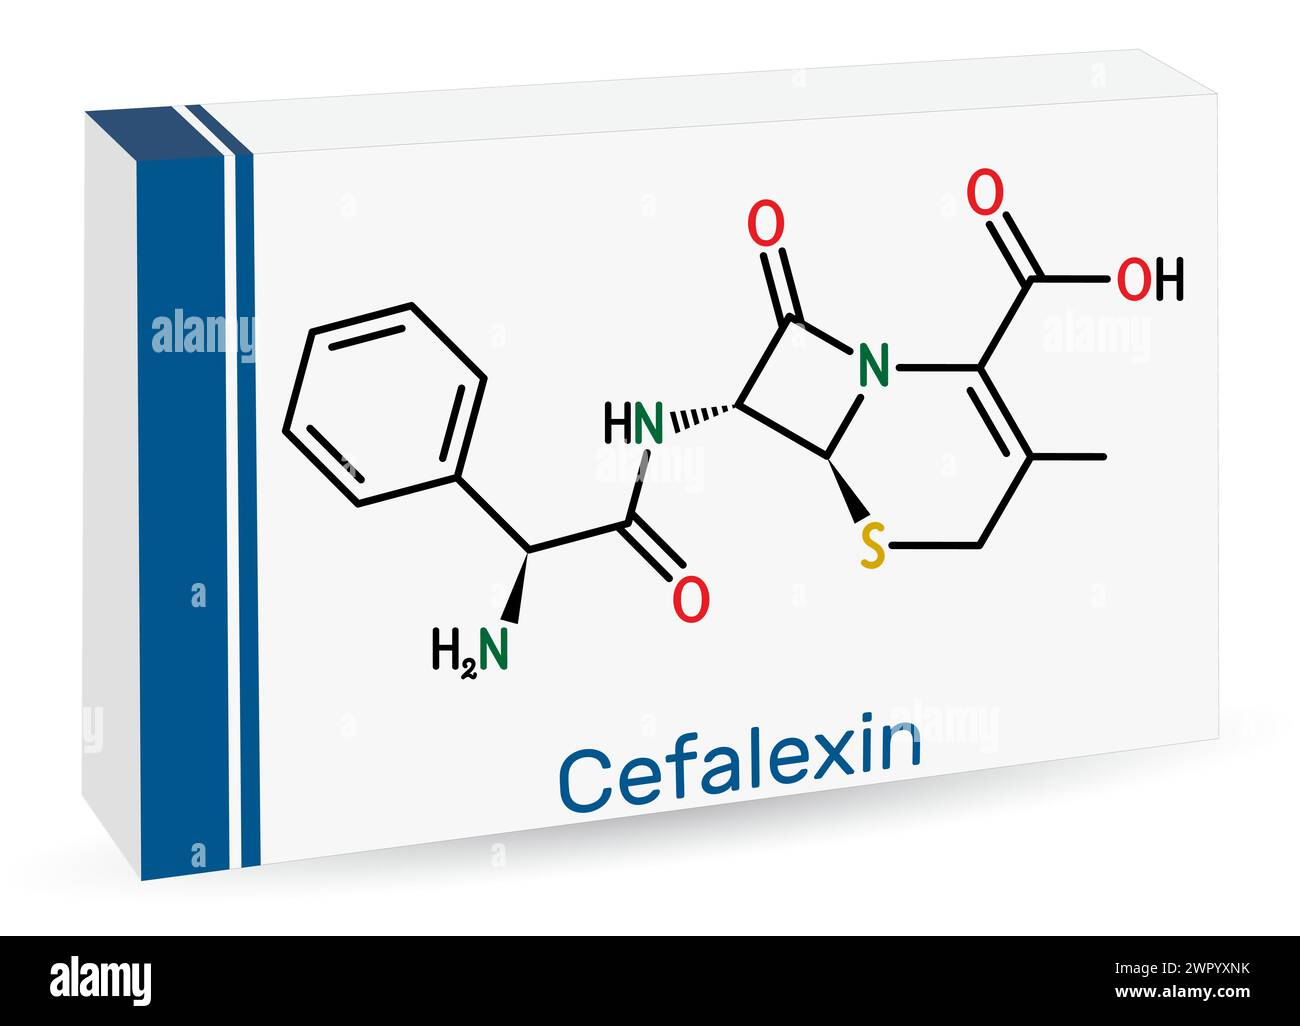 Cefalexin, cephalexin molecule. It is a beta-lactam antibiotic with bactericidal activity. Structural chemical formula and molecule model. Vector illu Stock Vector